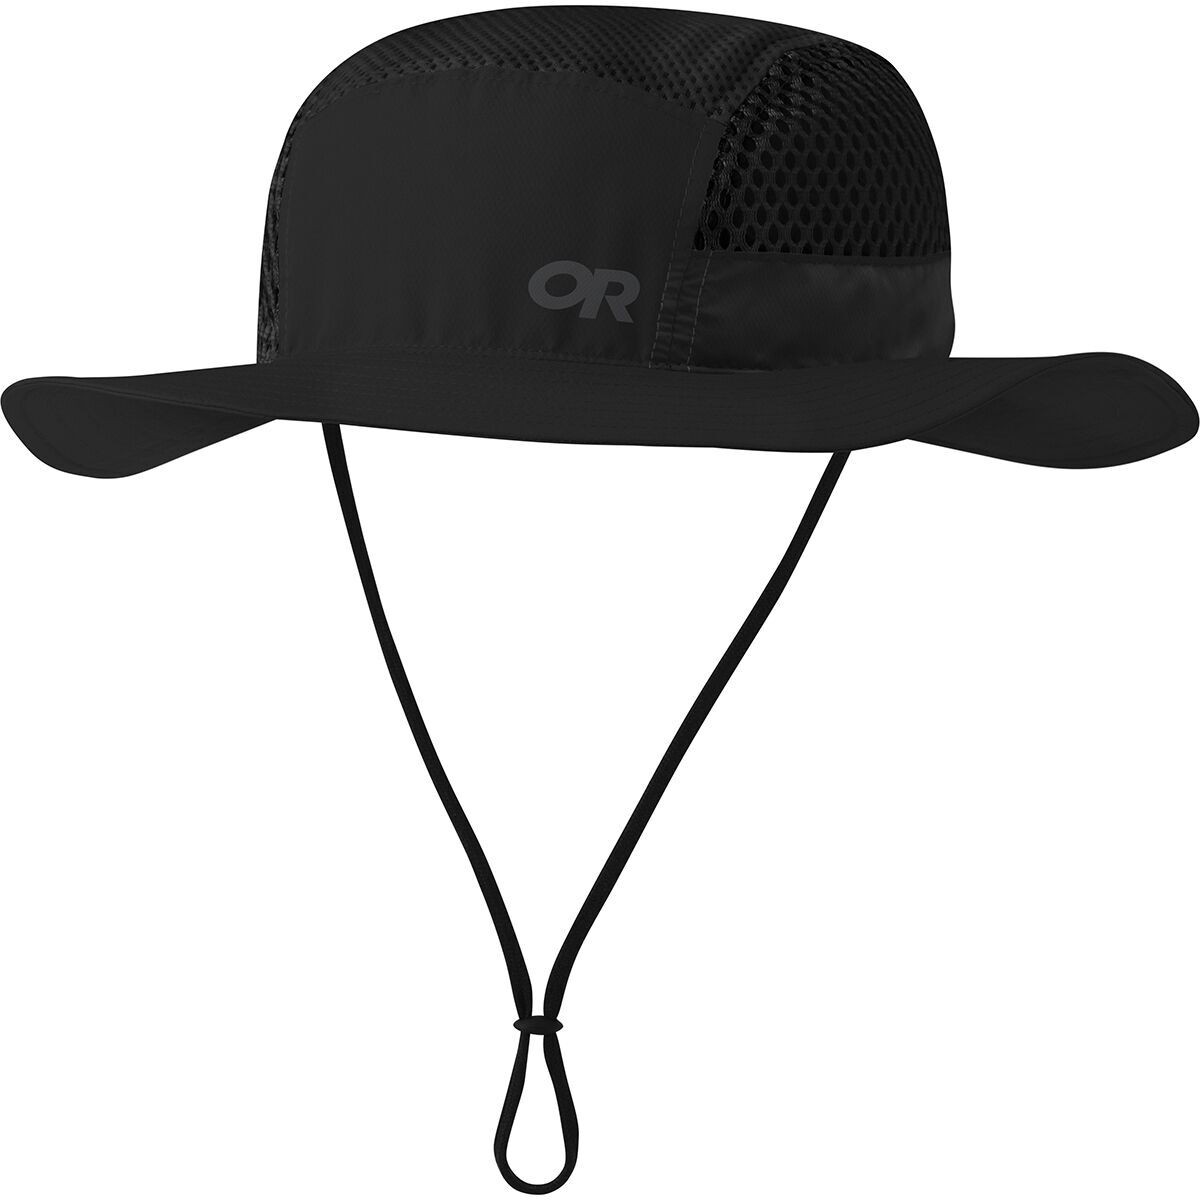 OUTDOOR RESEARCH Vantage Full Brim Hat, BLACK